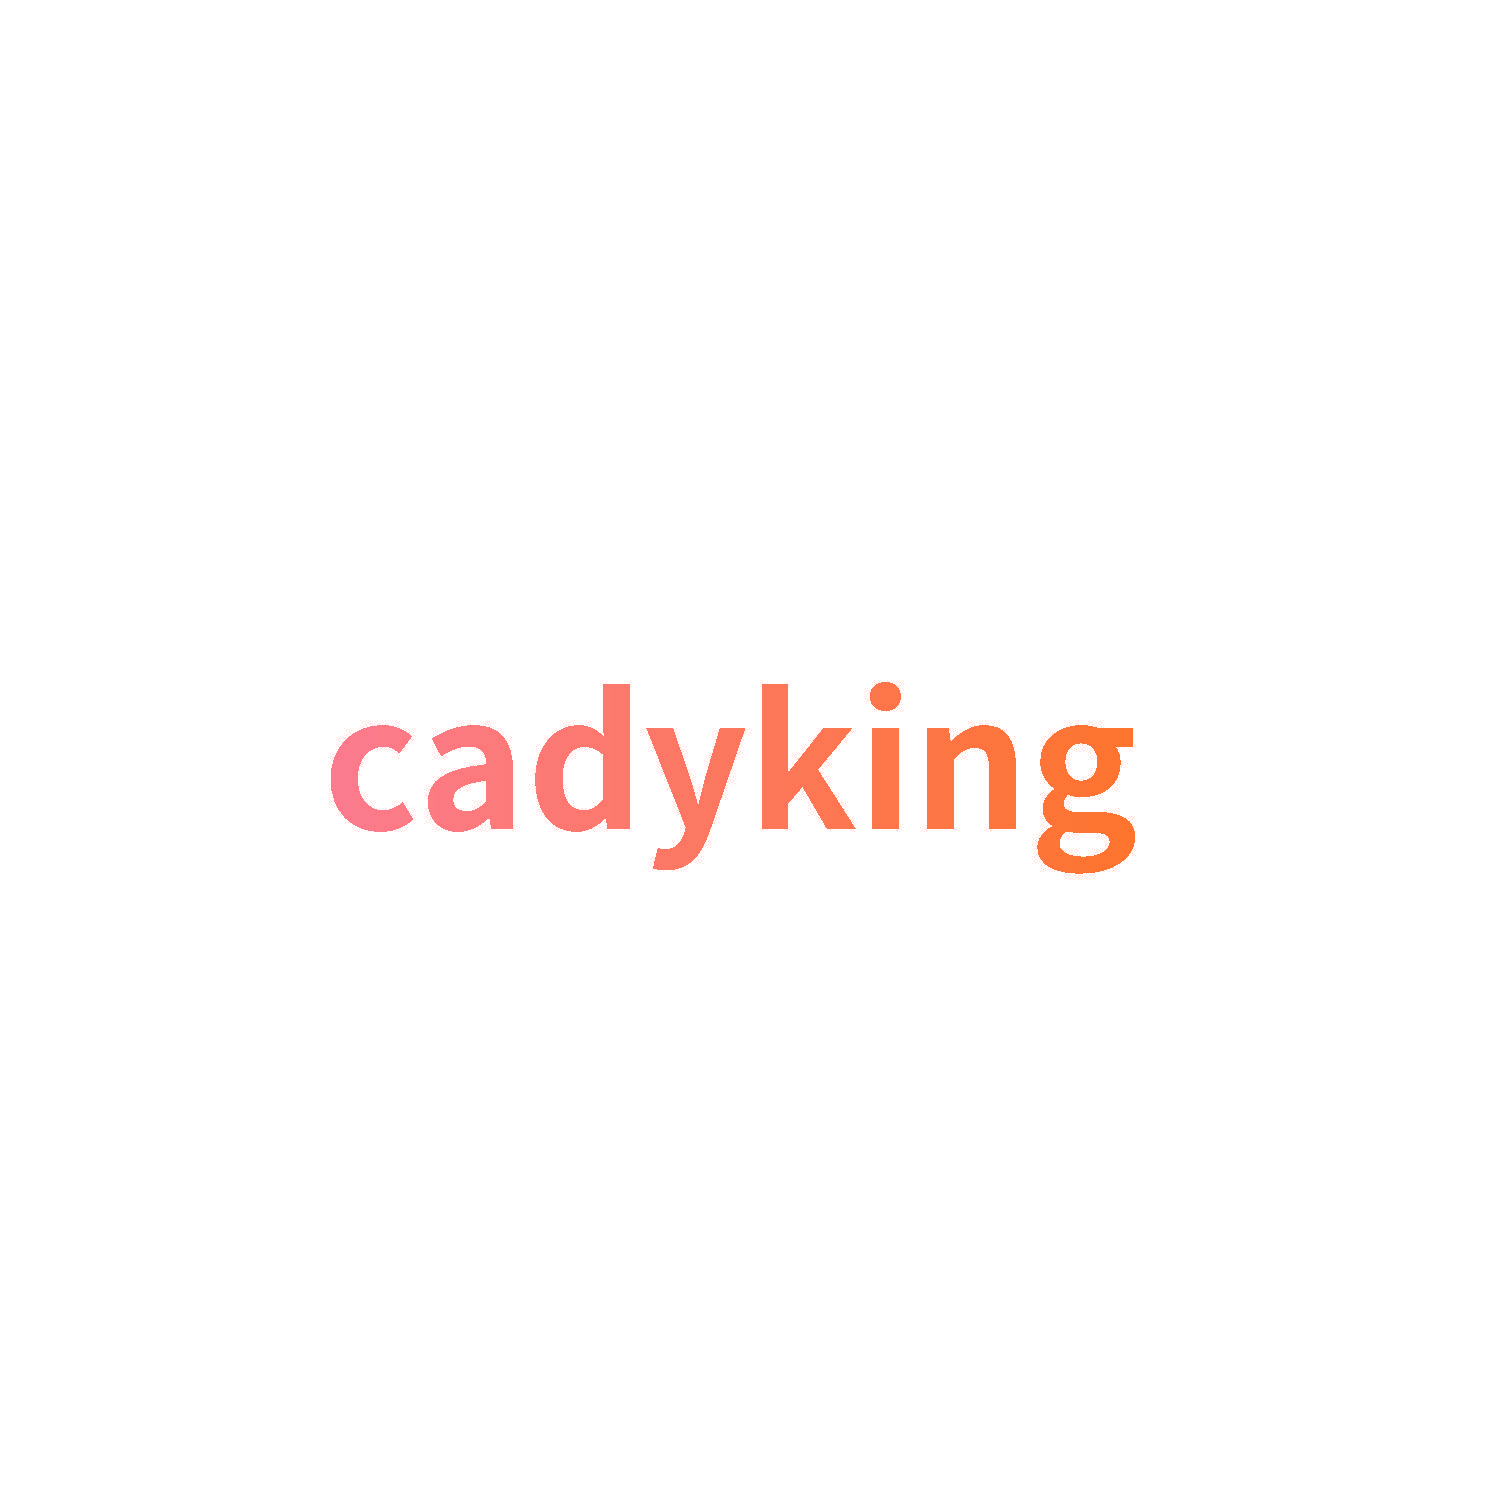 cadyking